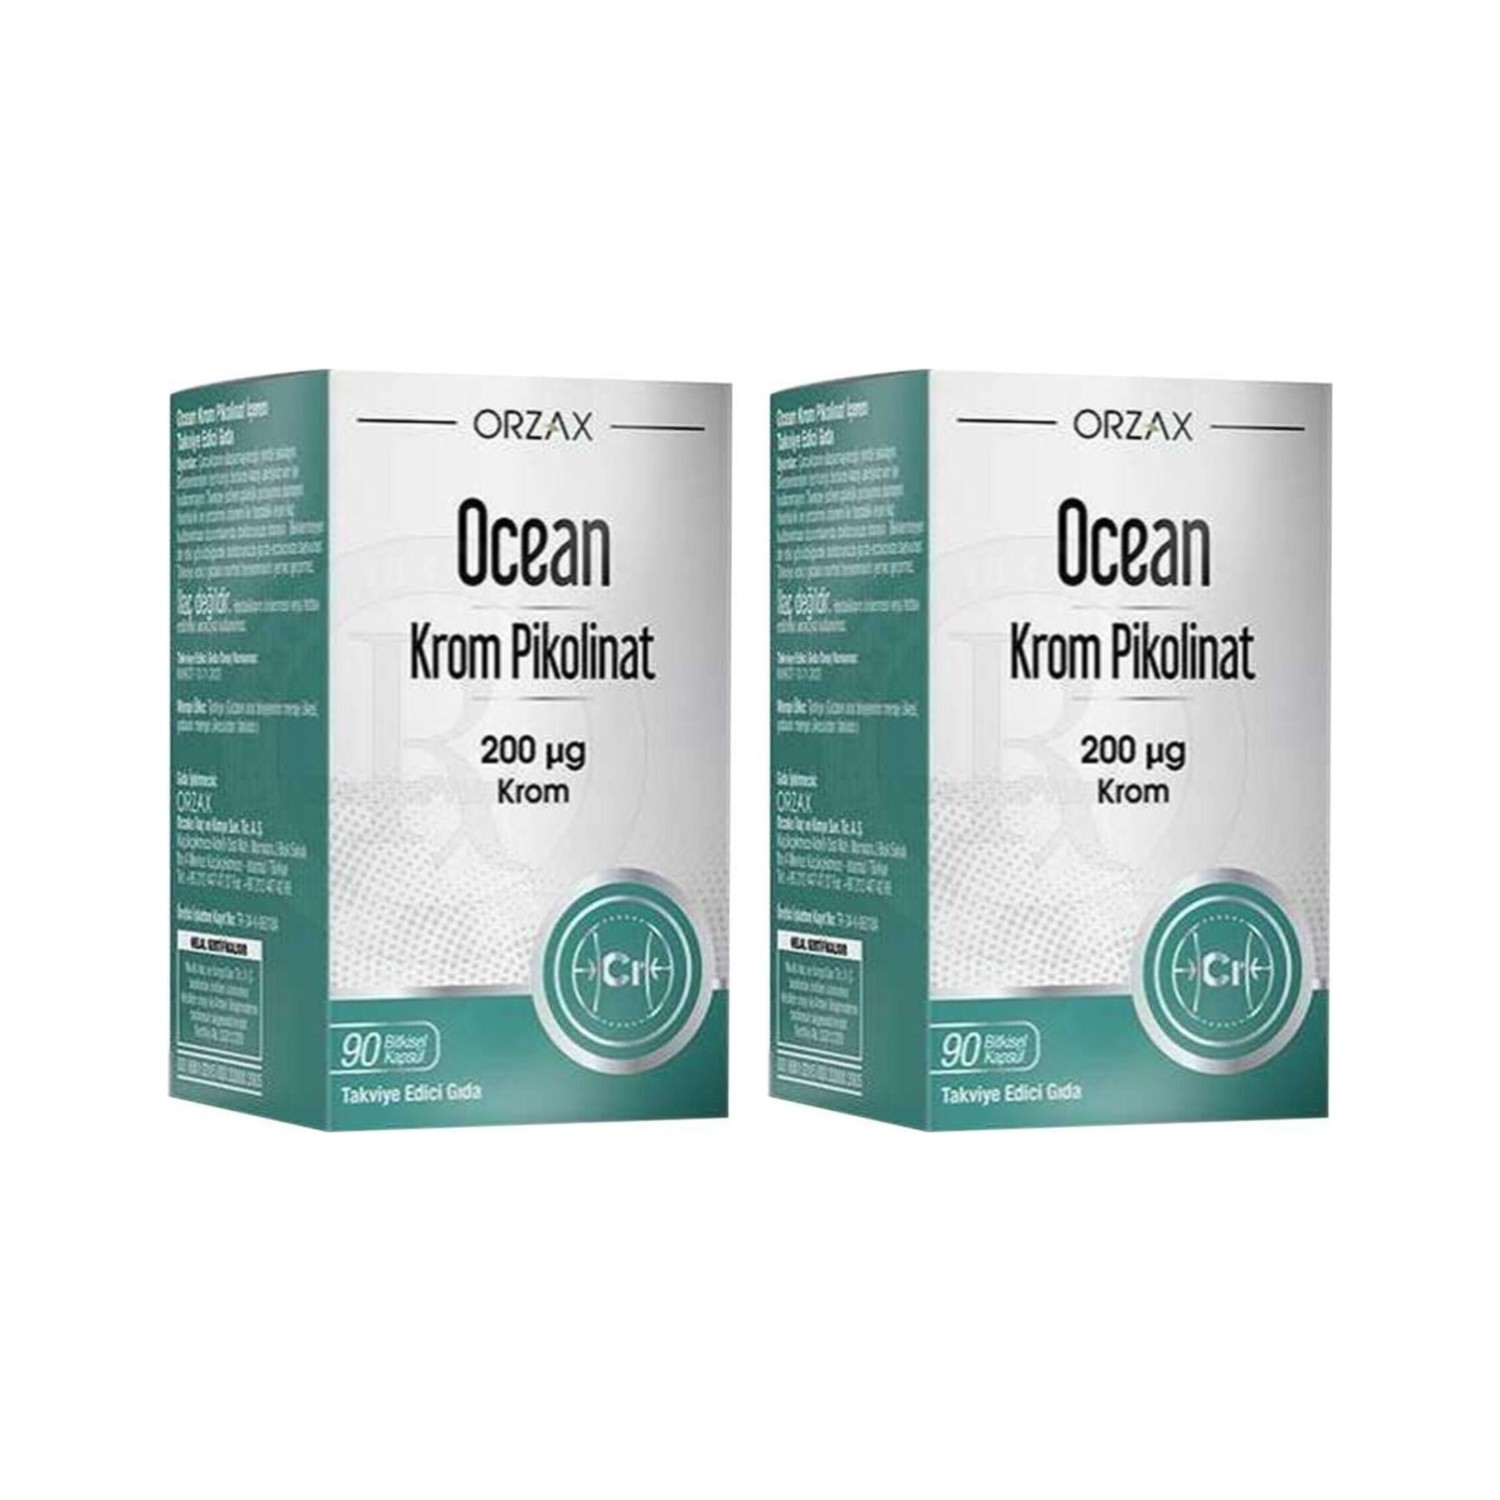 Пиколинат хрома Ocean 200 мкг, 2 упаковки по 90 капсул пиколинат хрома ocean orzax 20 мкг 90 капсул